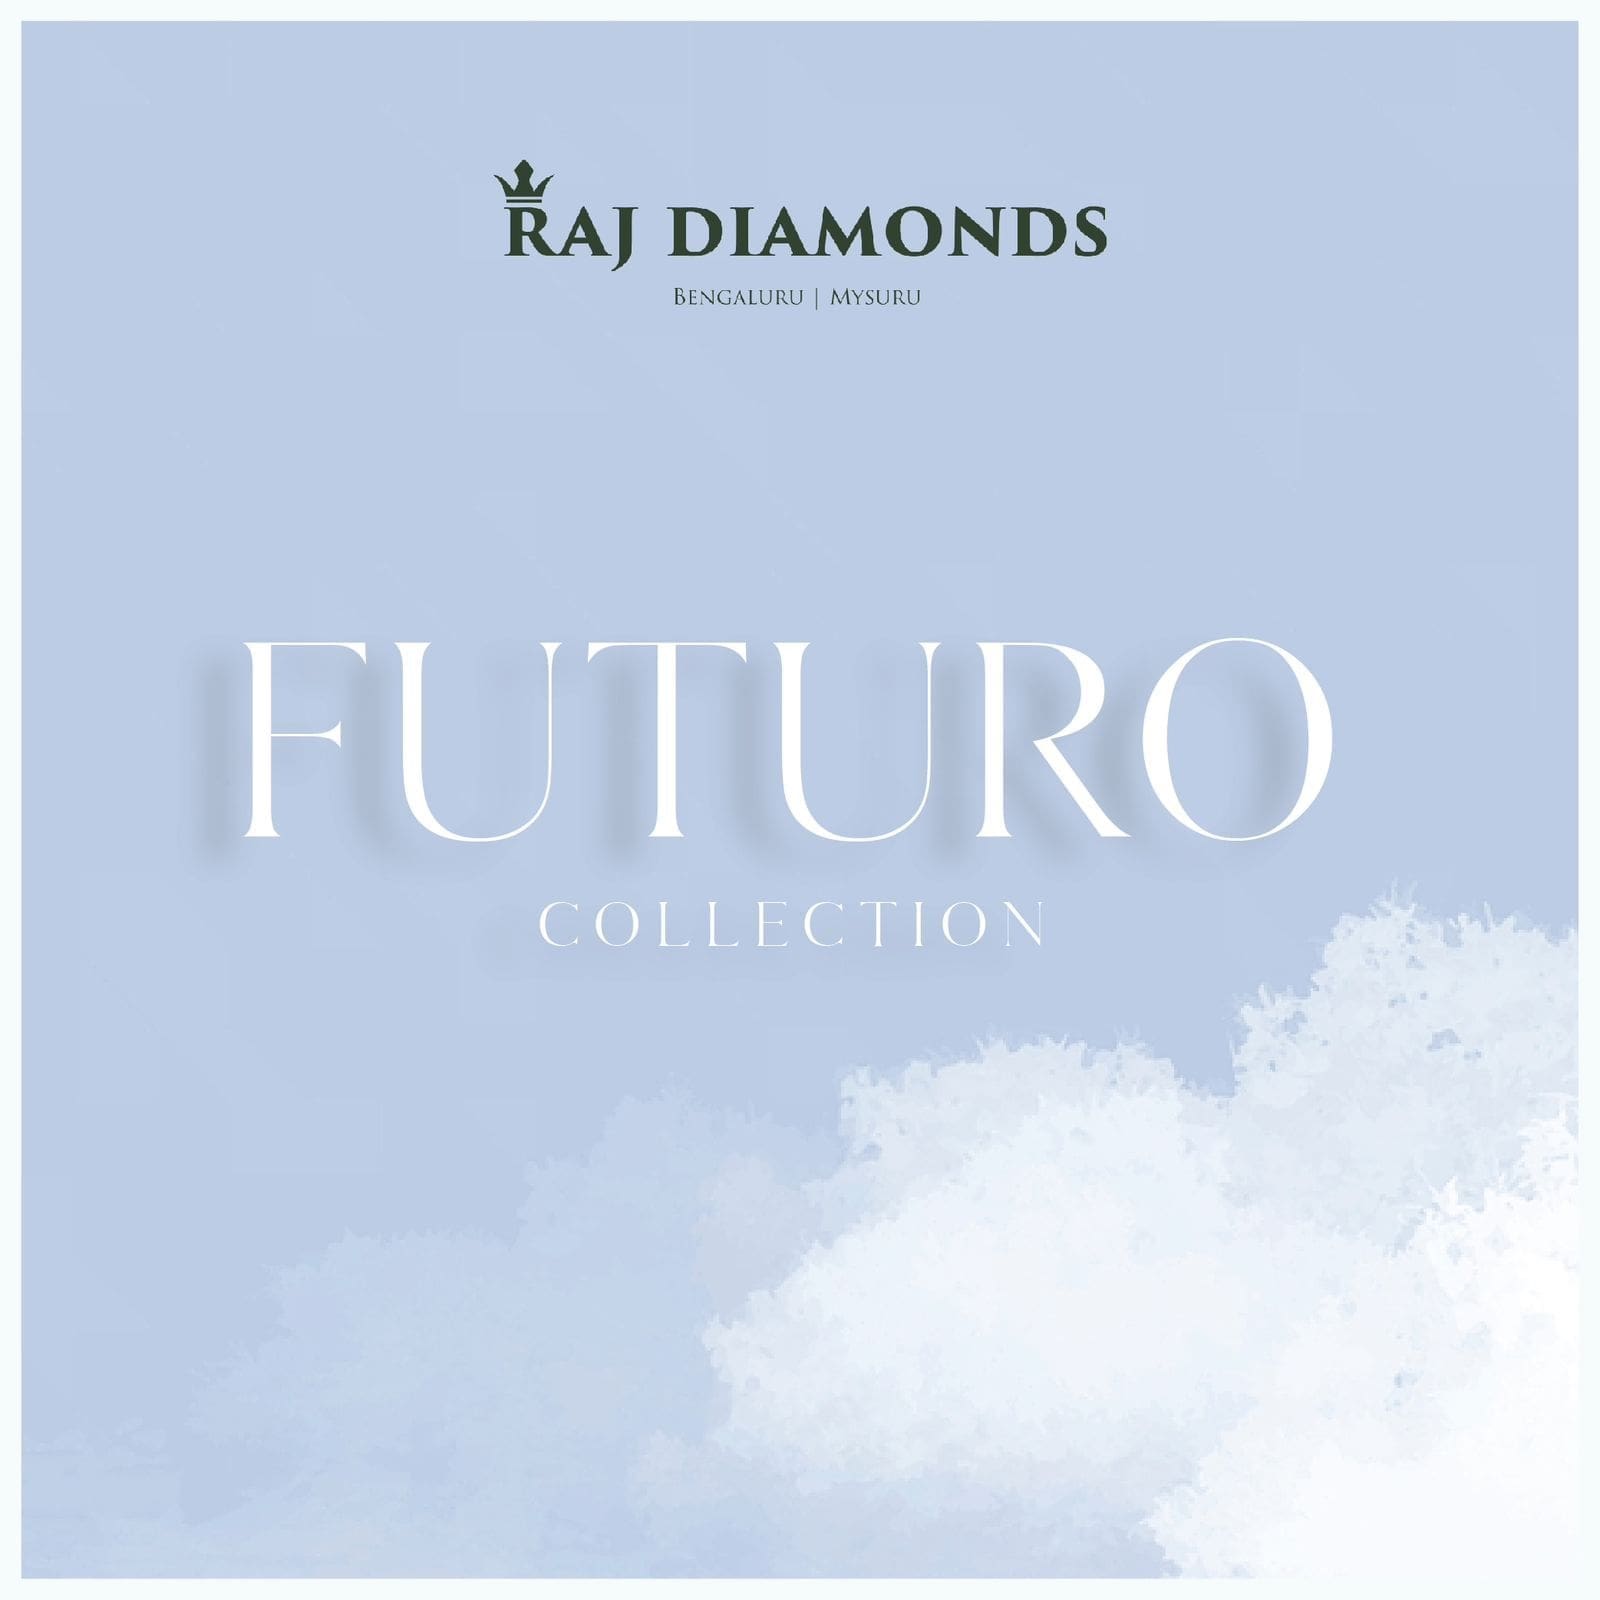 RAJ DIAMONDS INTRODUCES THE MAGNIFICENT “FUTURO” COLLECTION FUTURISTIC DESIGNS USING CERAMIC AND DIAMONDS